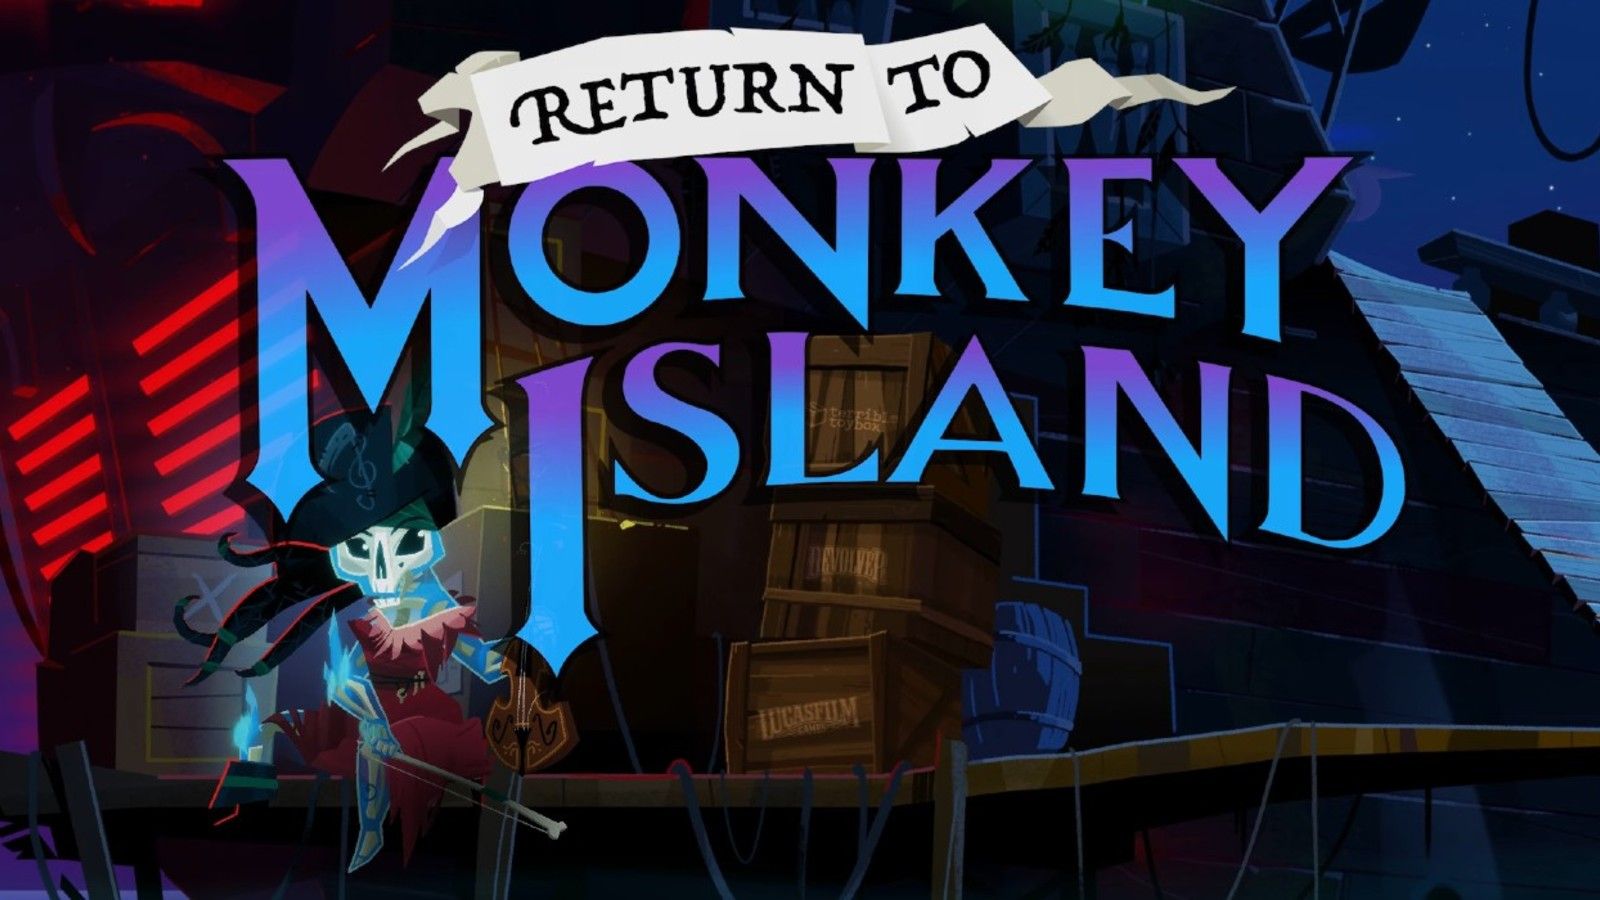 Video: Return to Monkey Island gameplay